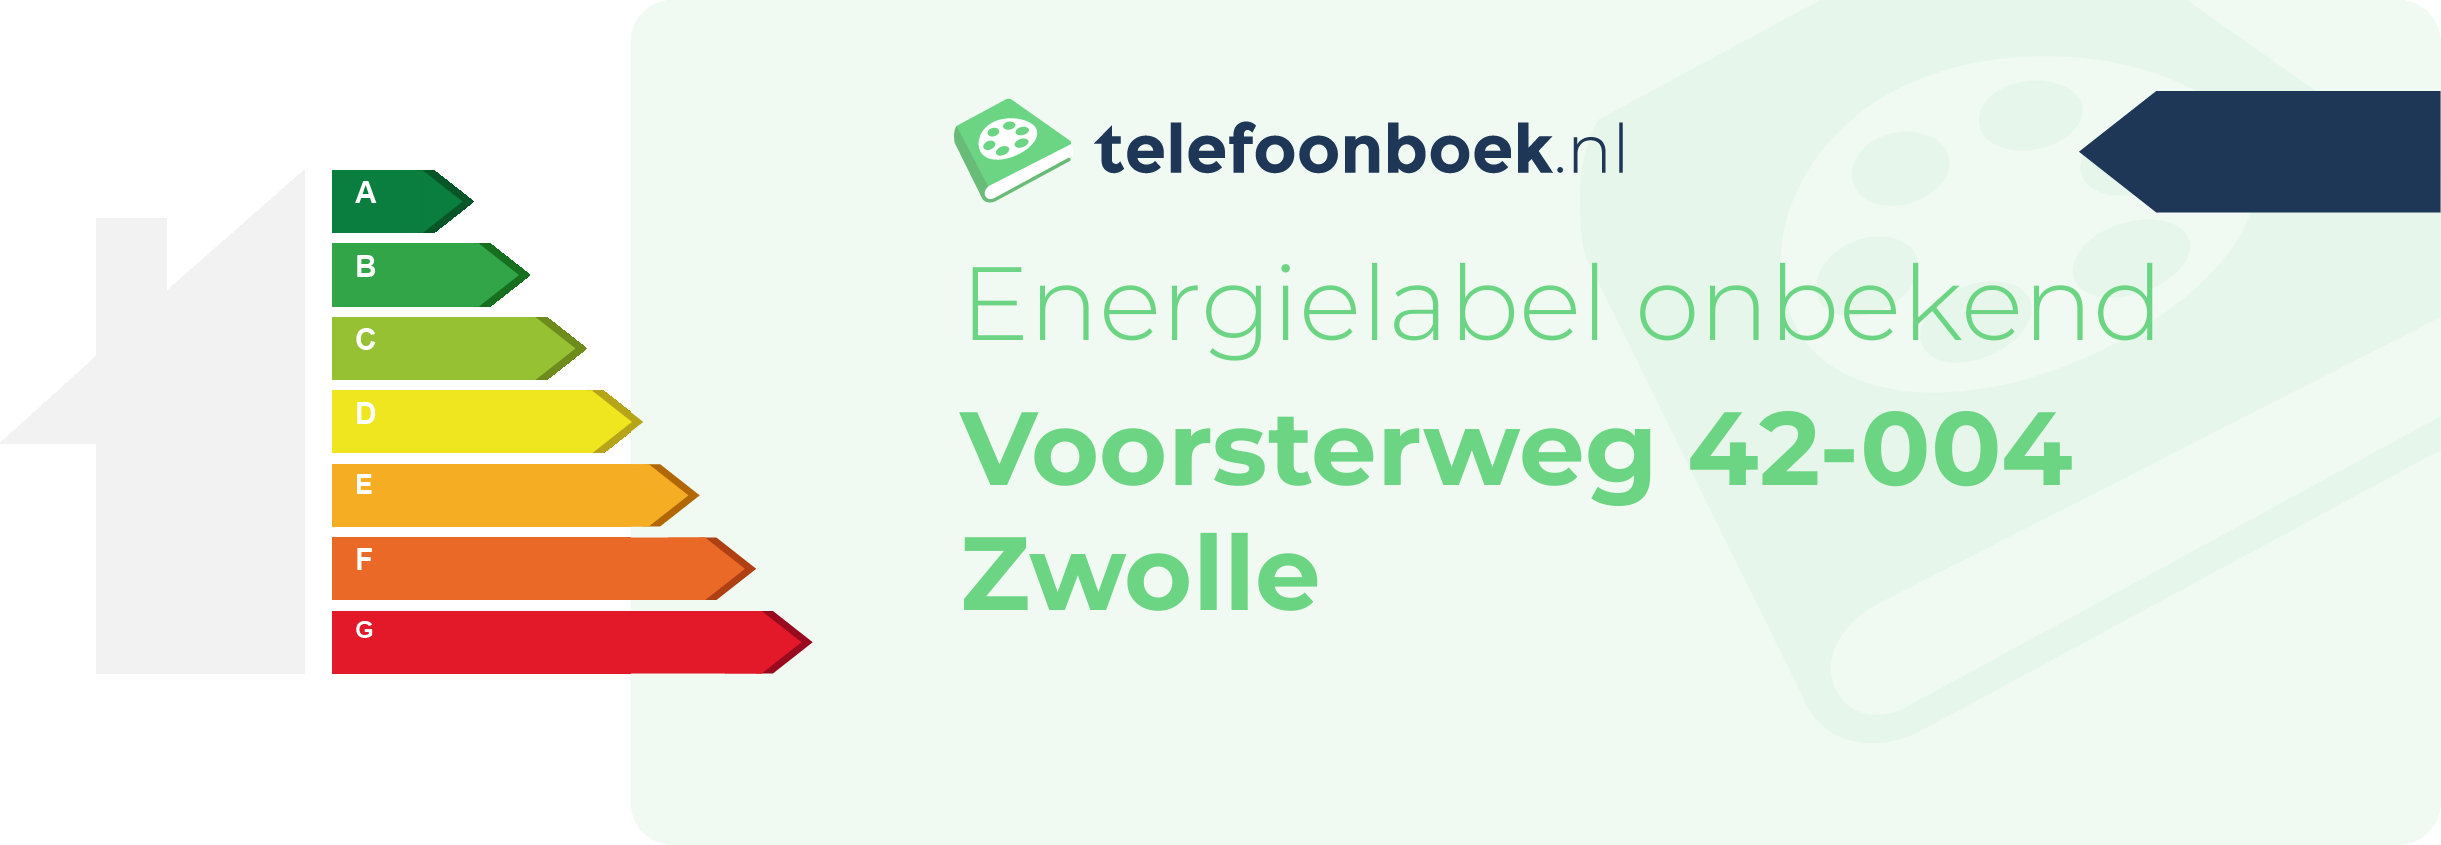 Energielabel Voorsterweg 42-004 Zwolle